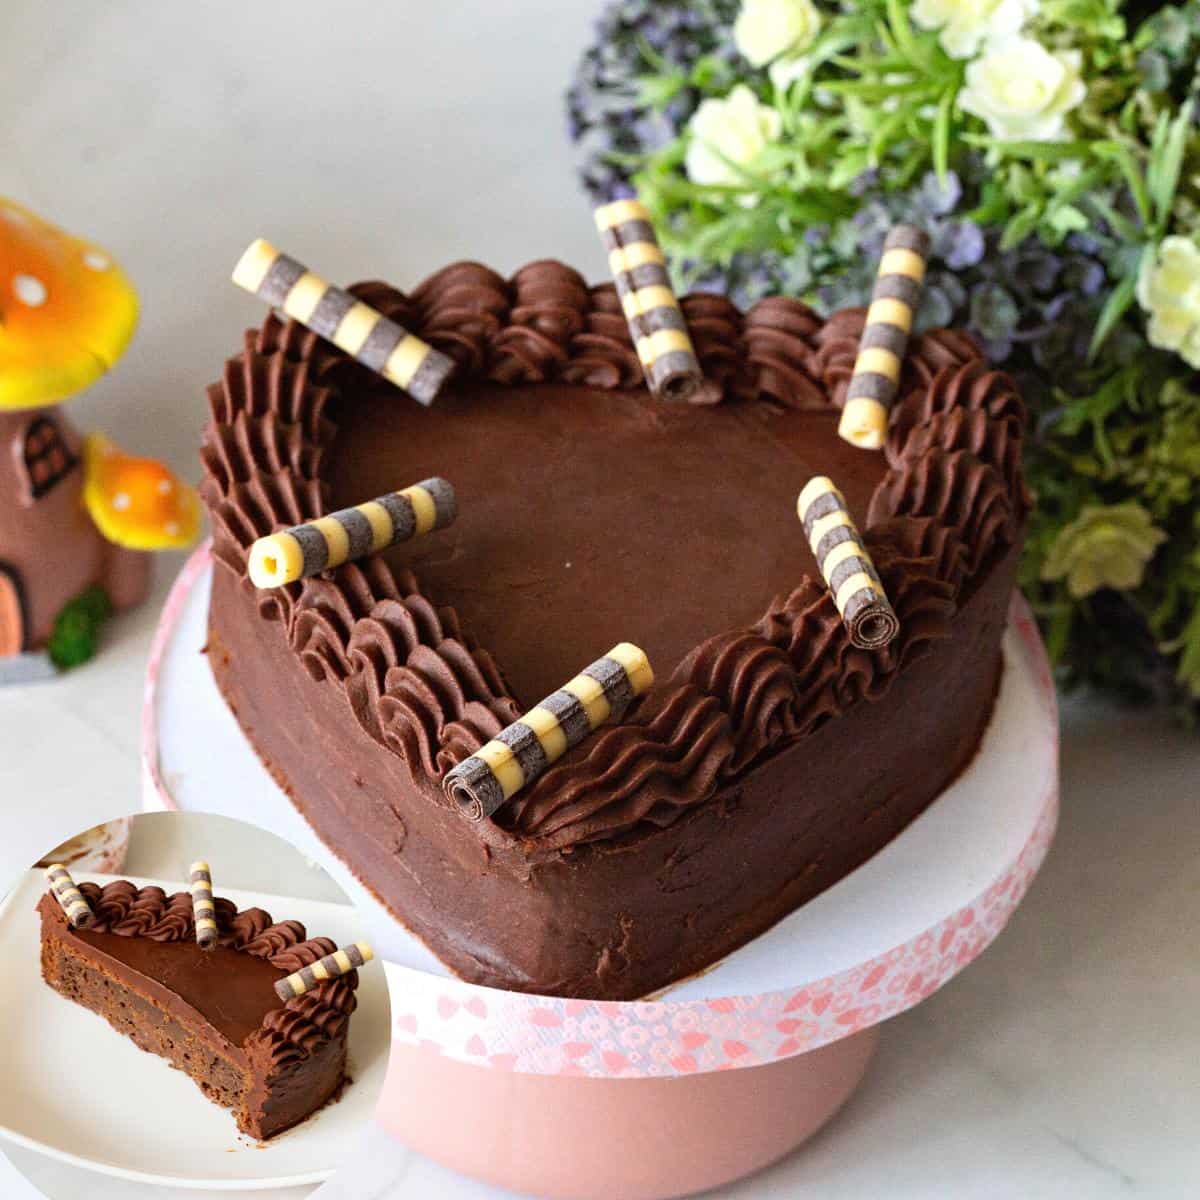 A heart fudgy chocolate cake.